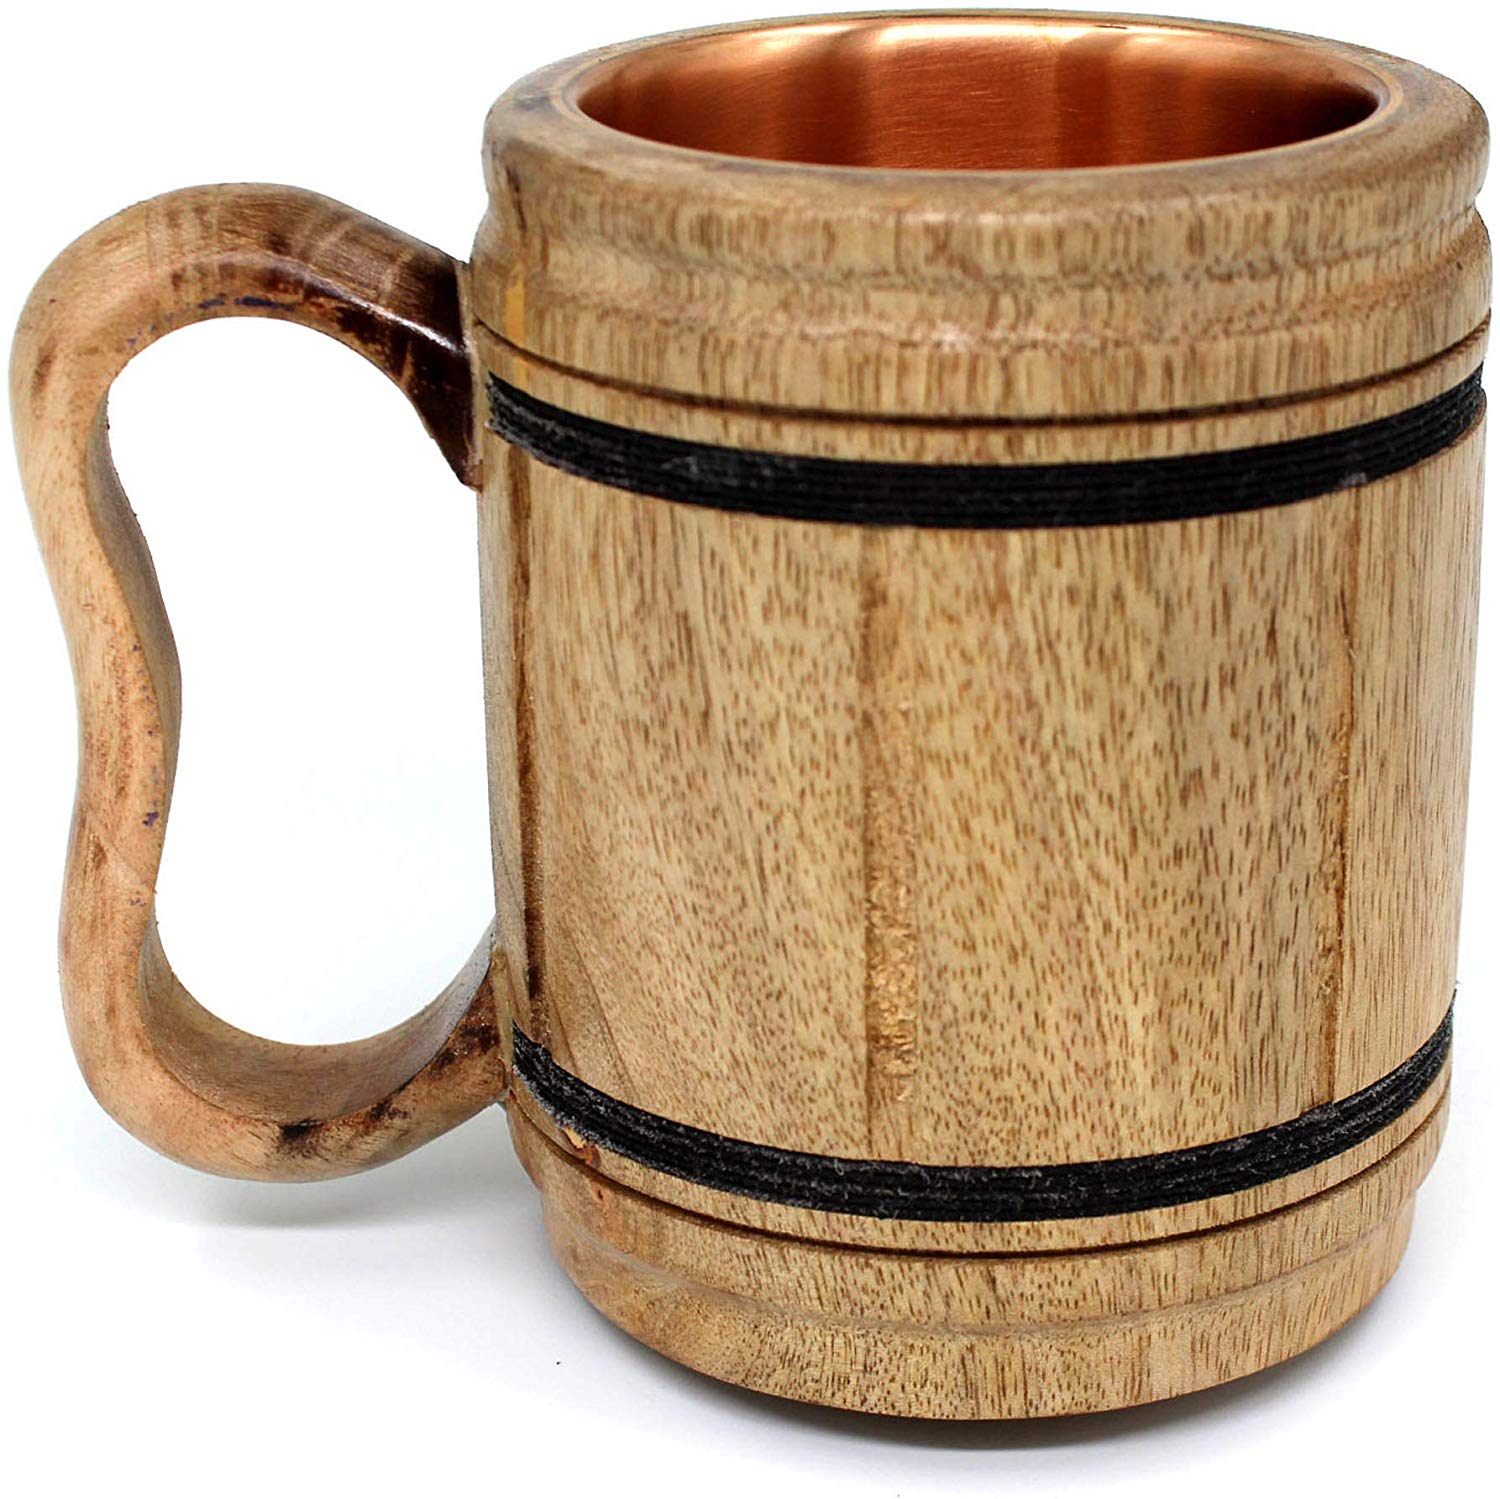 Handmade Palm Wood Beer Mug Souvenir Cup Carved Wooden